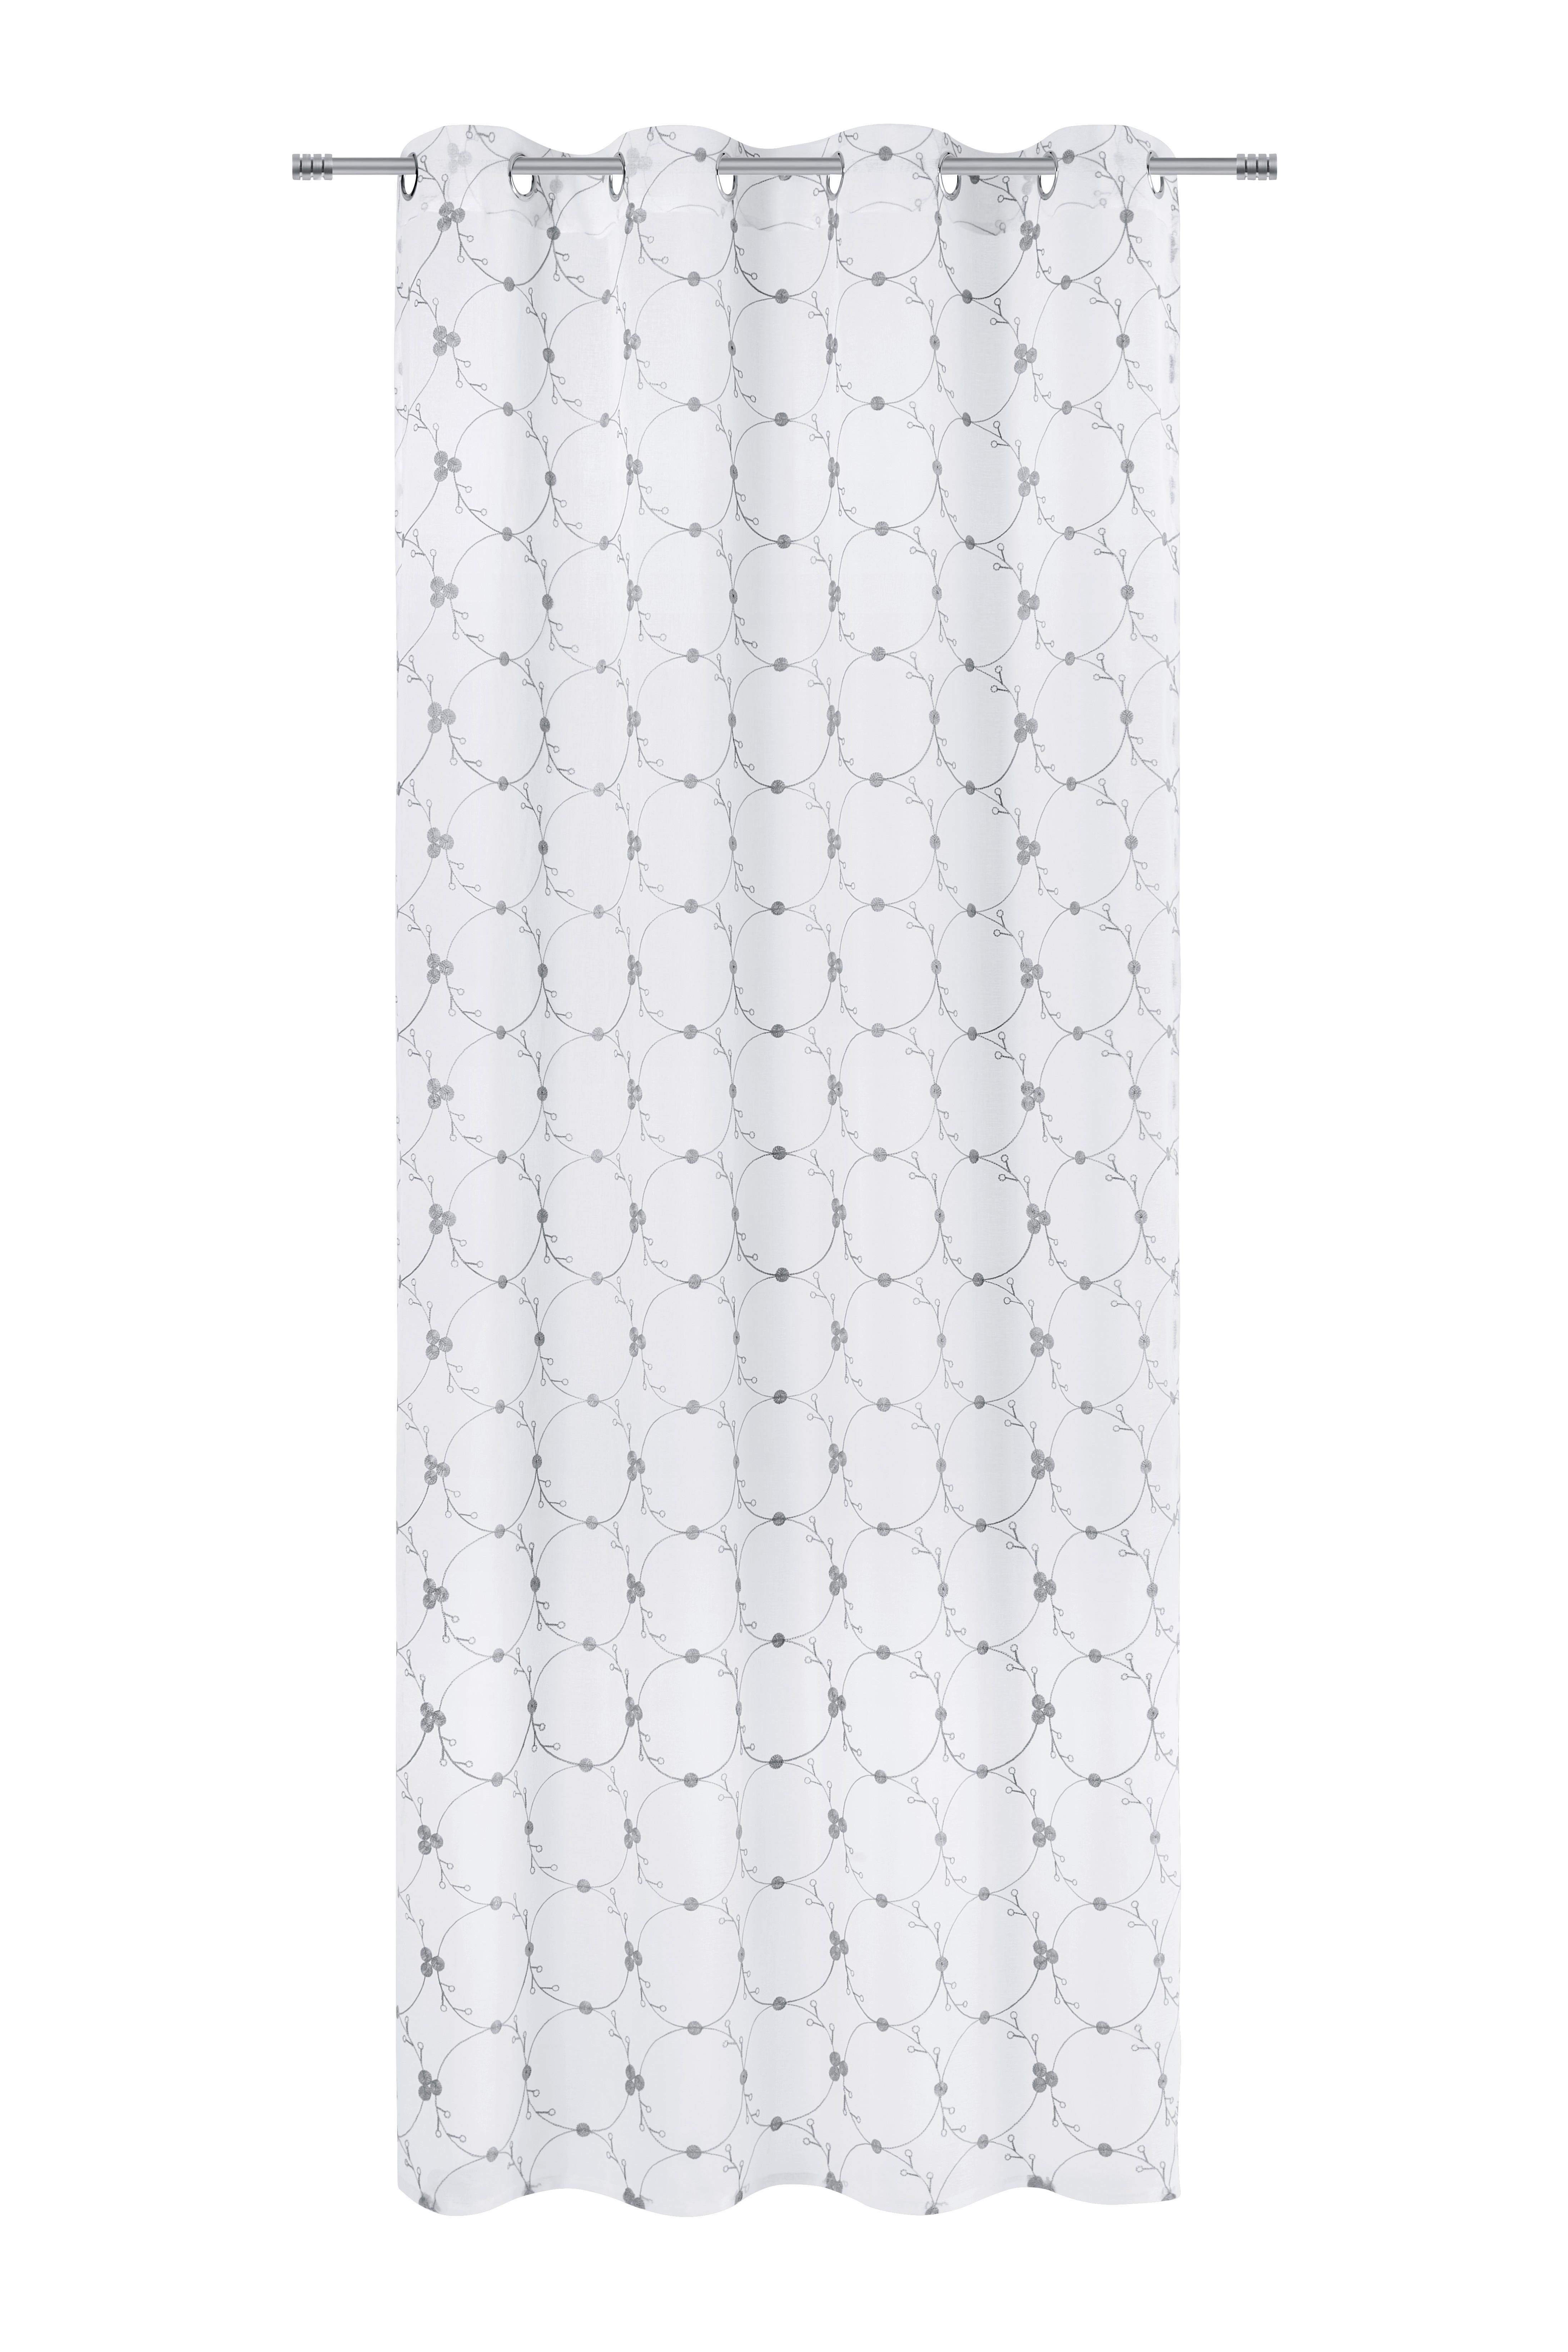 Ringlis Függöny Tabea - Szürke, modern, Textil (140/245cm) - Luca Bessoni